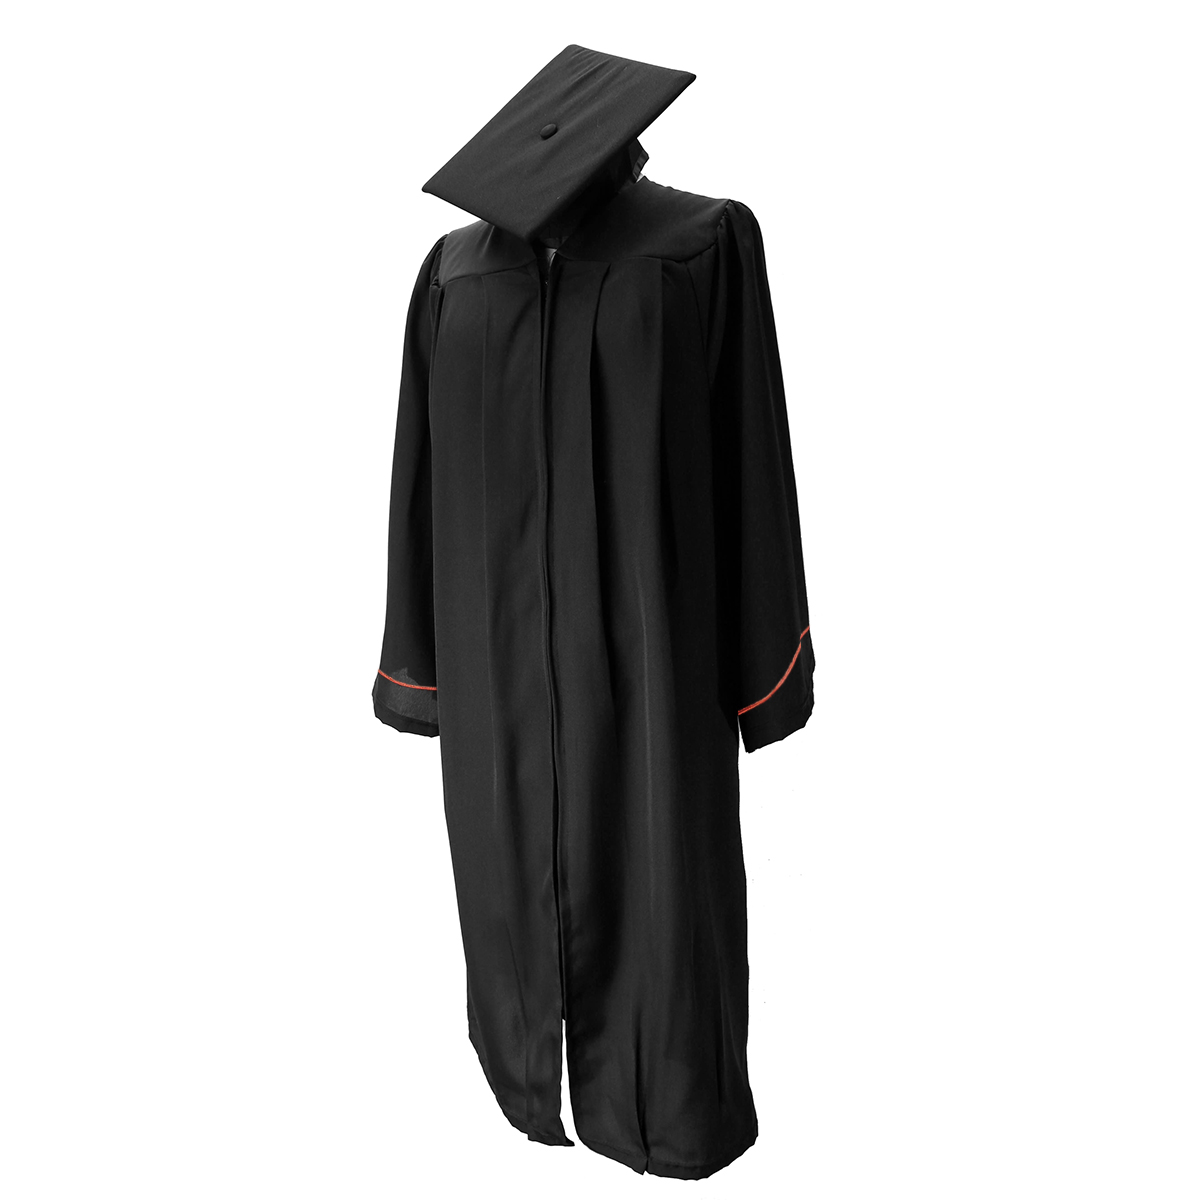 Female Graduate Student Black Graduation Gown Stock Photo 398000458 |  Shutterstock